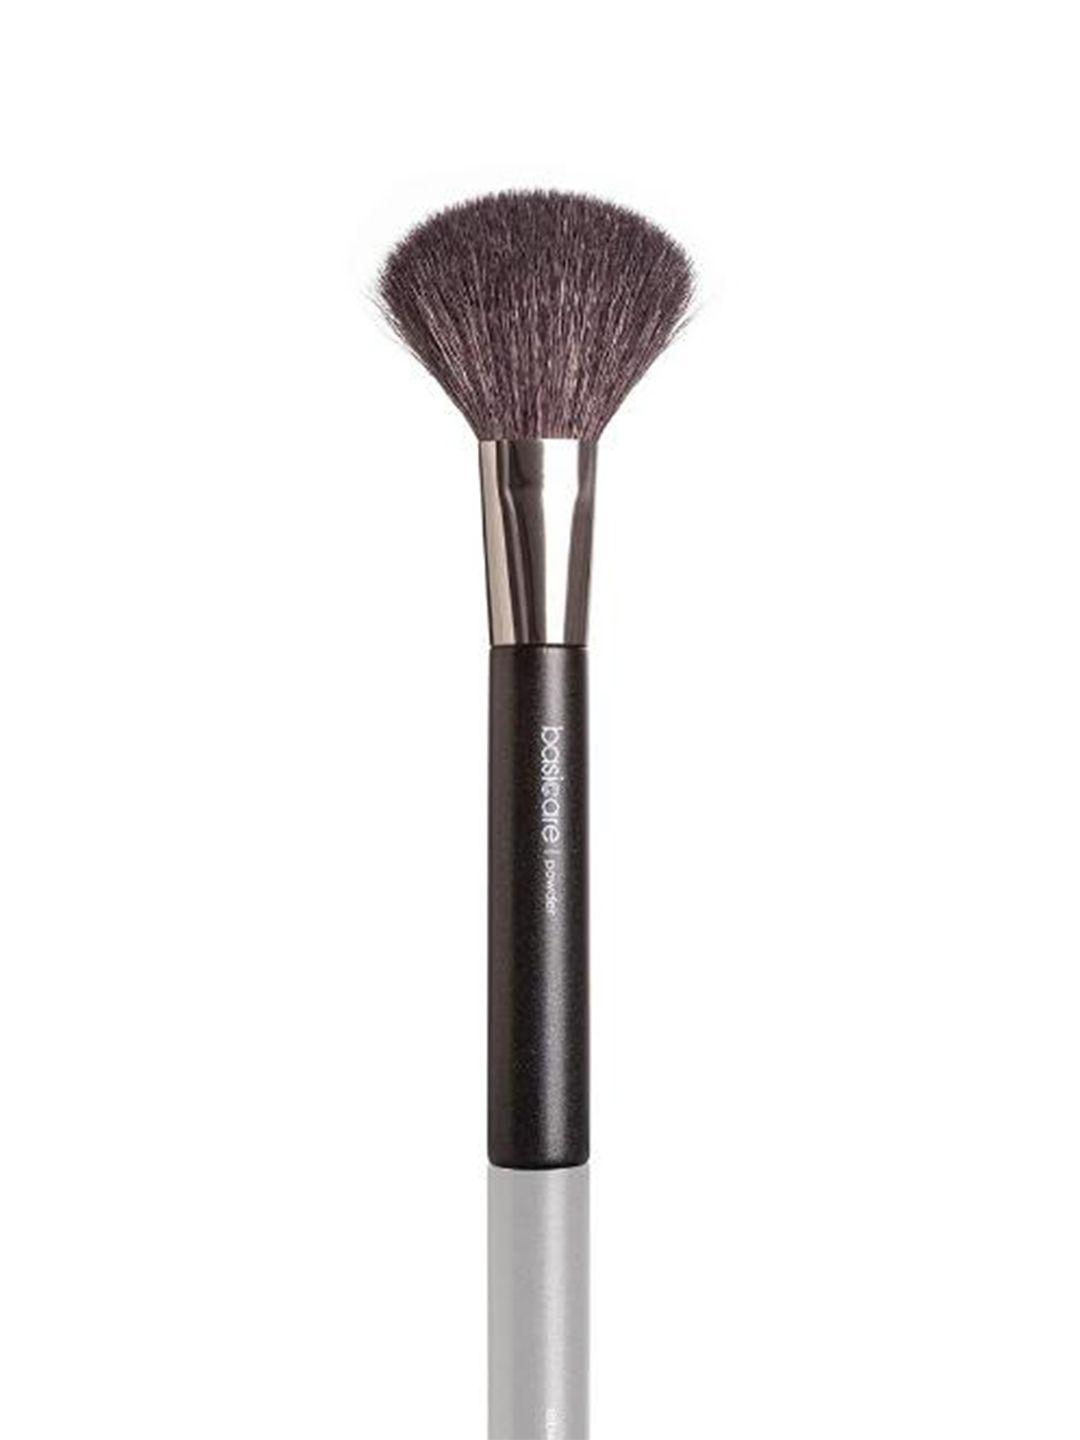 basicare-women-compact-powder-makeup-brush